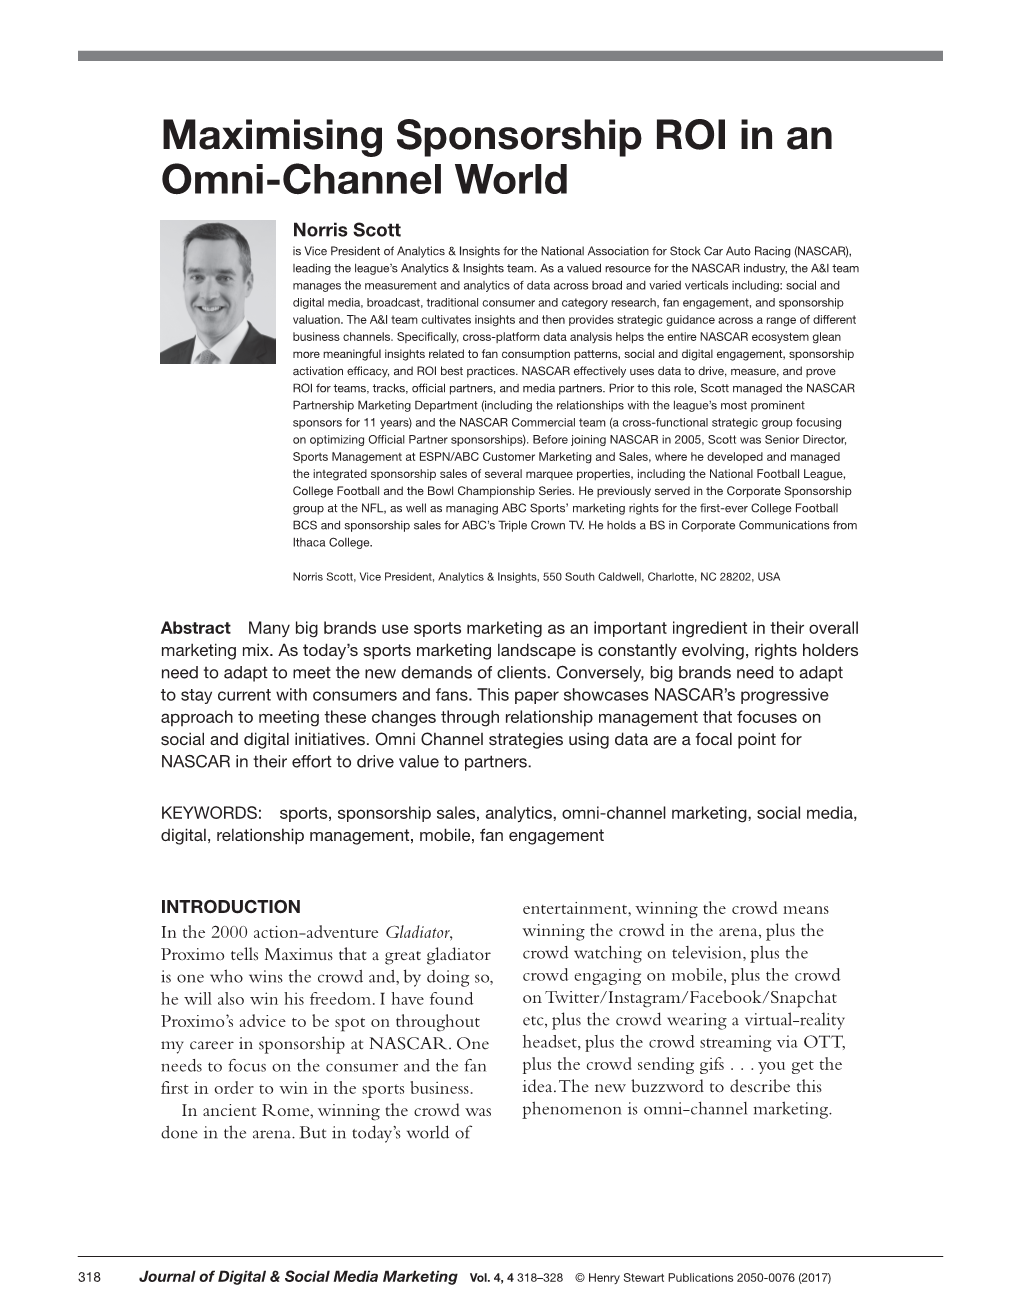 Maximising Sponsorship ROI in an Omni-Channel World